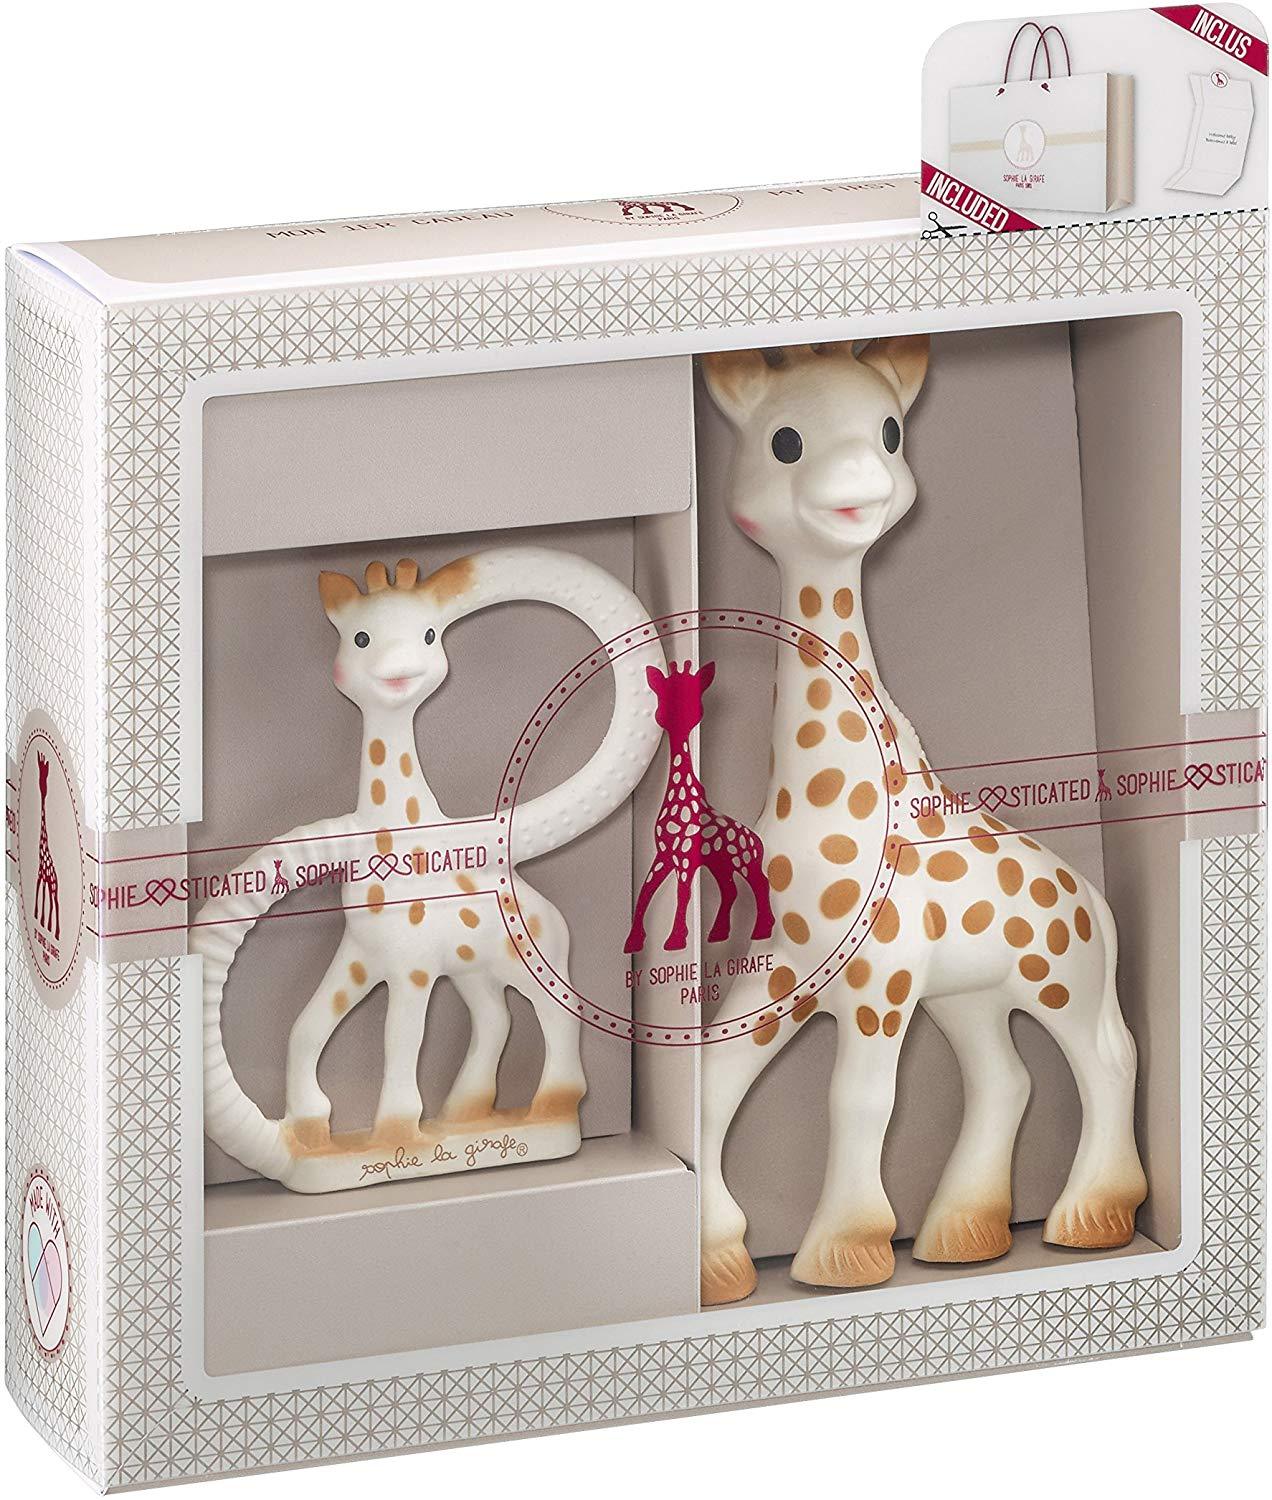 Girafa Sophie - Conjunto sofisticado de mordedor - Conjunto de present